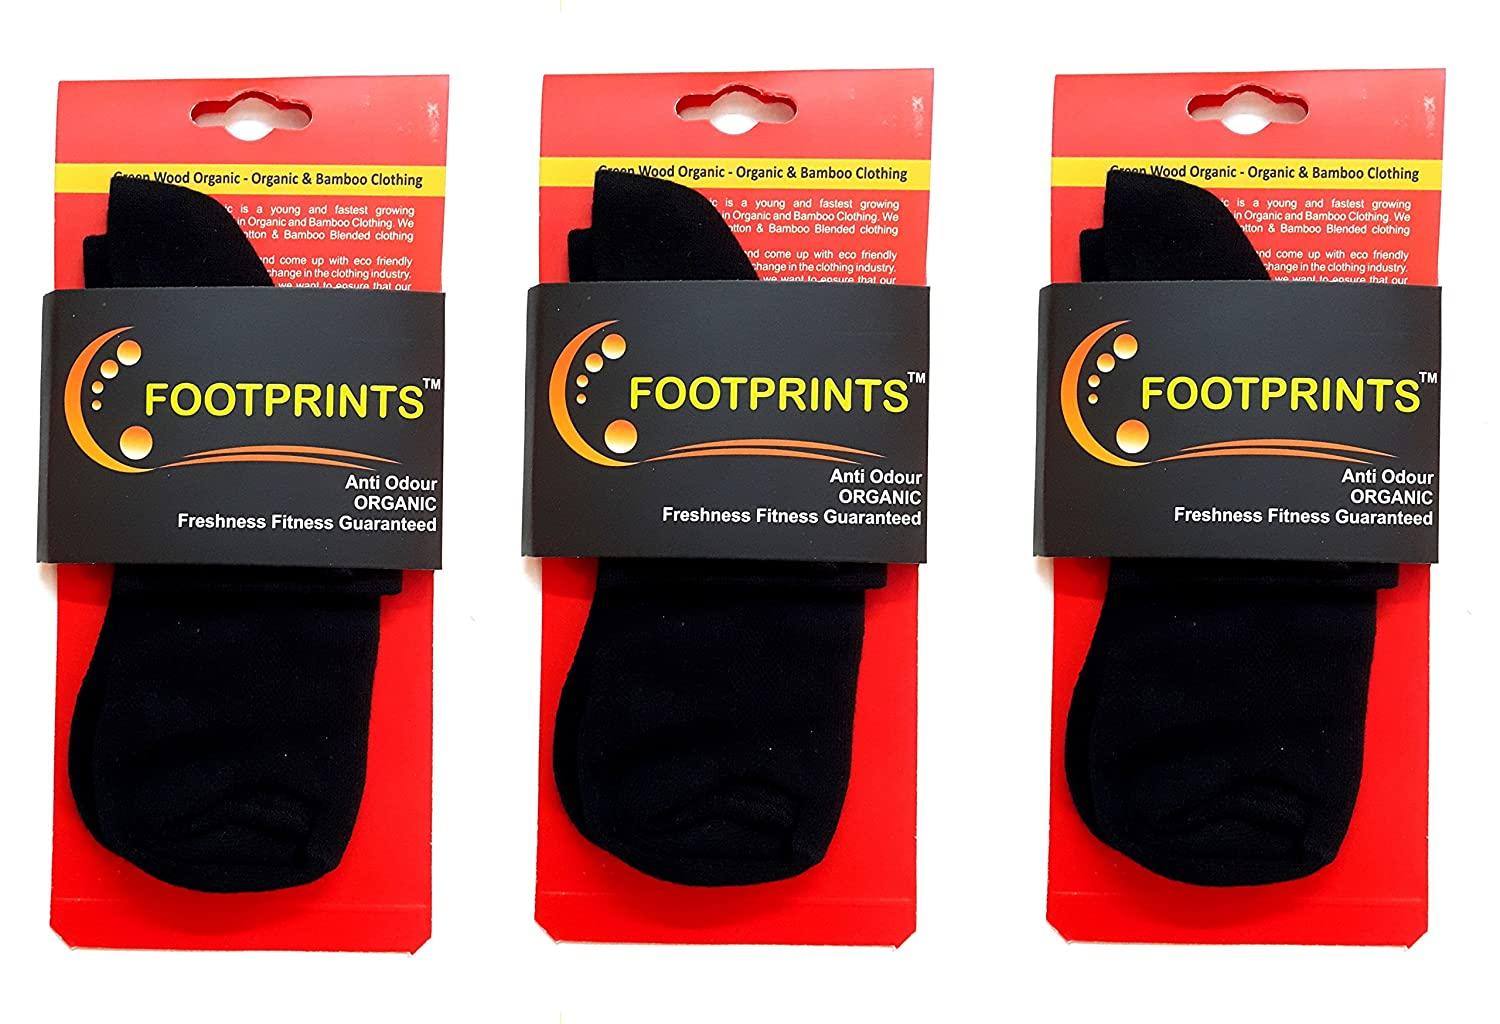 Footprints Organic Cotton Women Ankle Socks- Pack of 3 Black - Freesize (6-9)